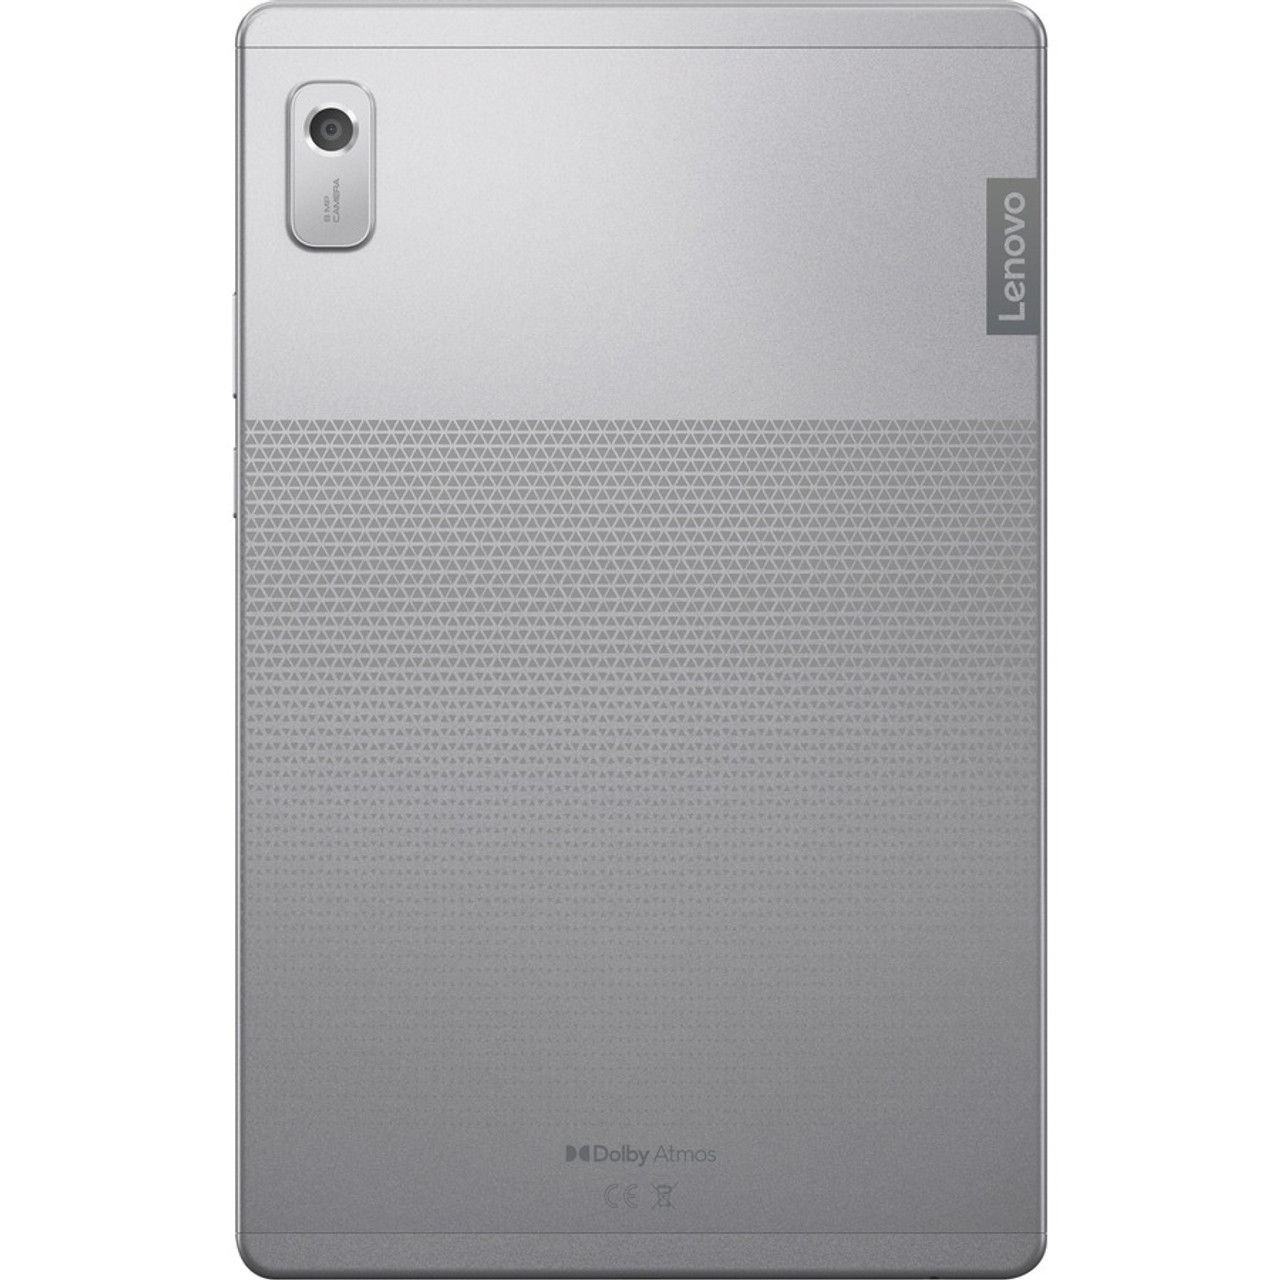 Lenovo Tab M9 Tablet - 9 HD - Octa-core (Cortex A75 Dual-core (2